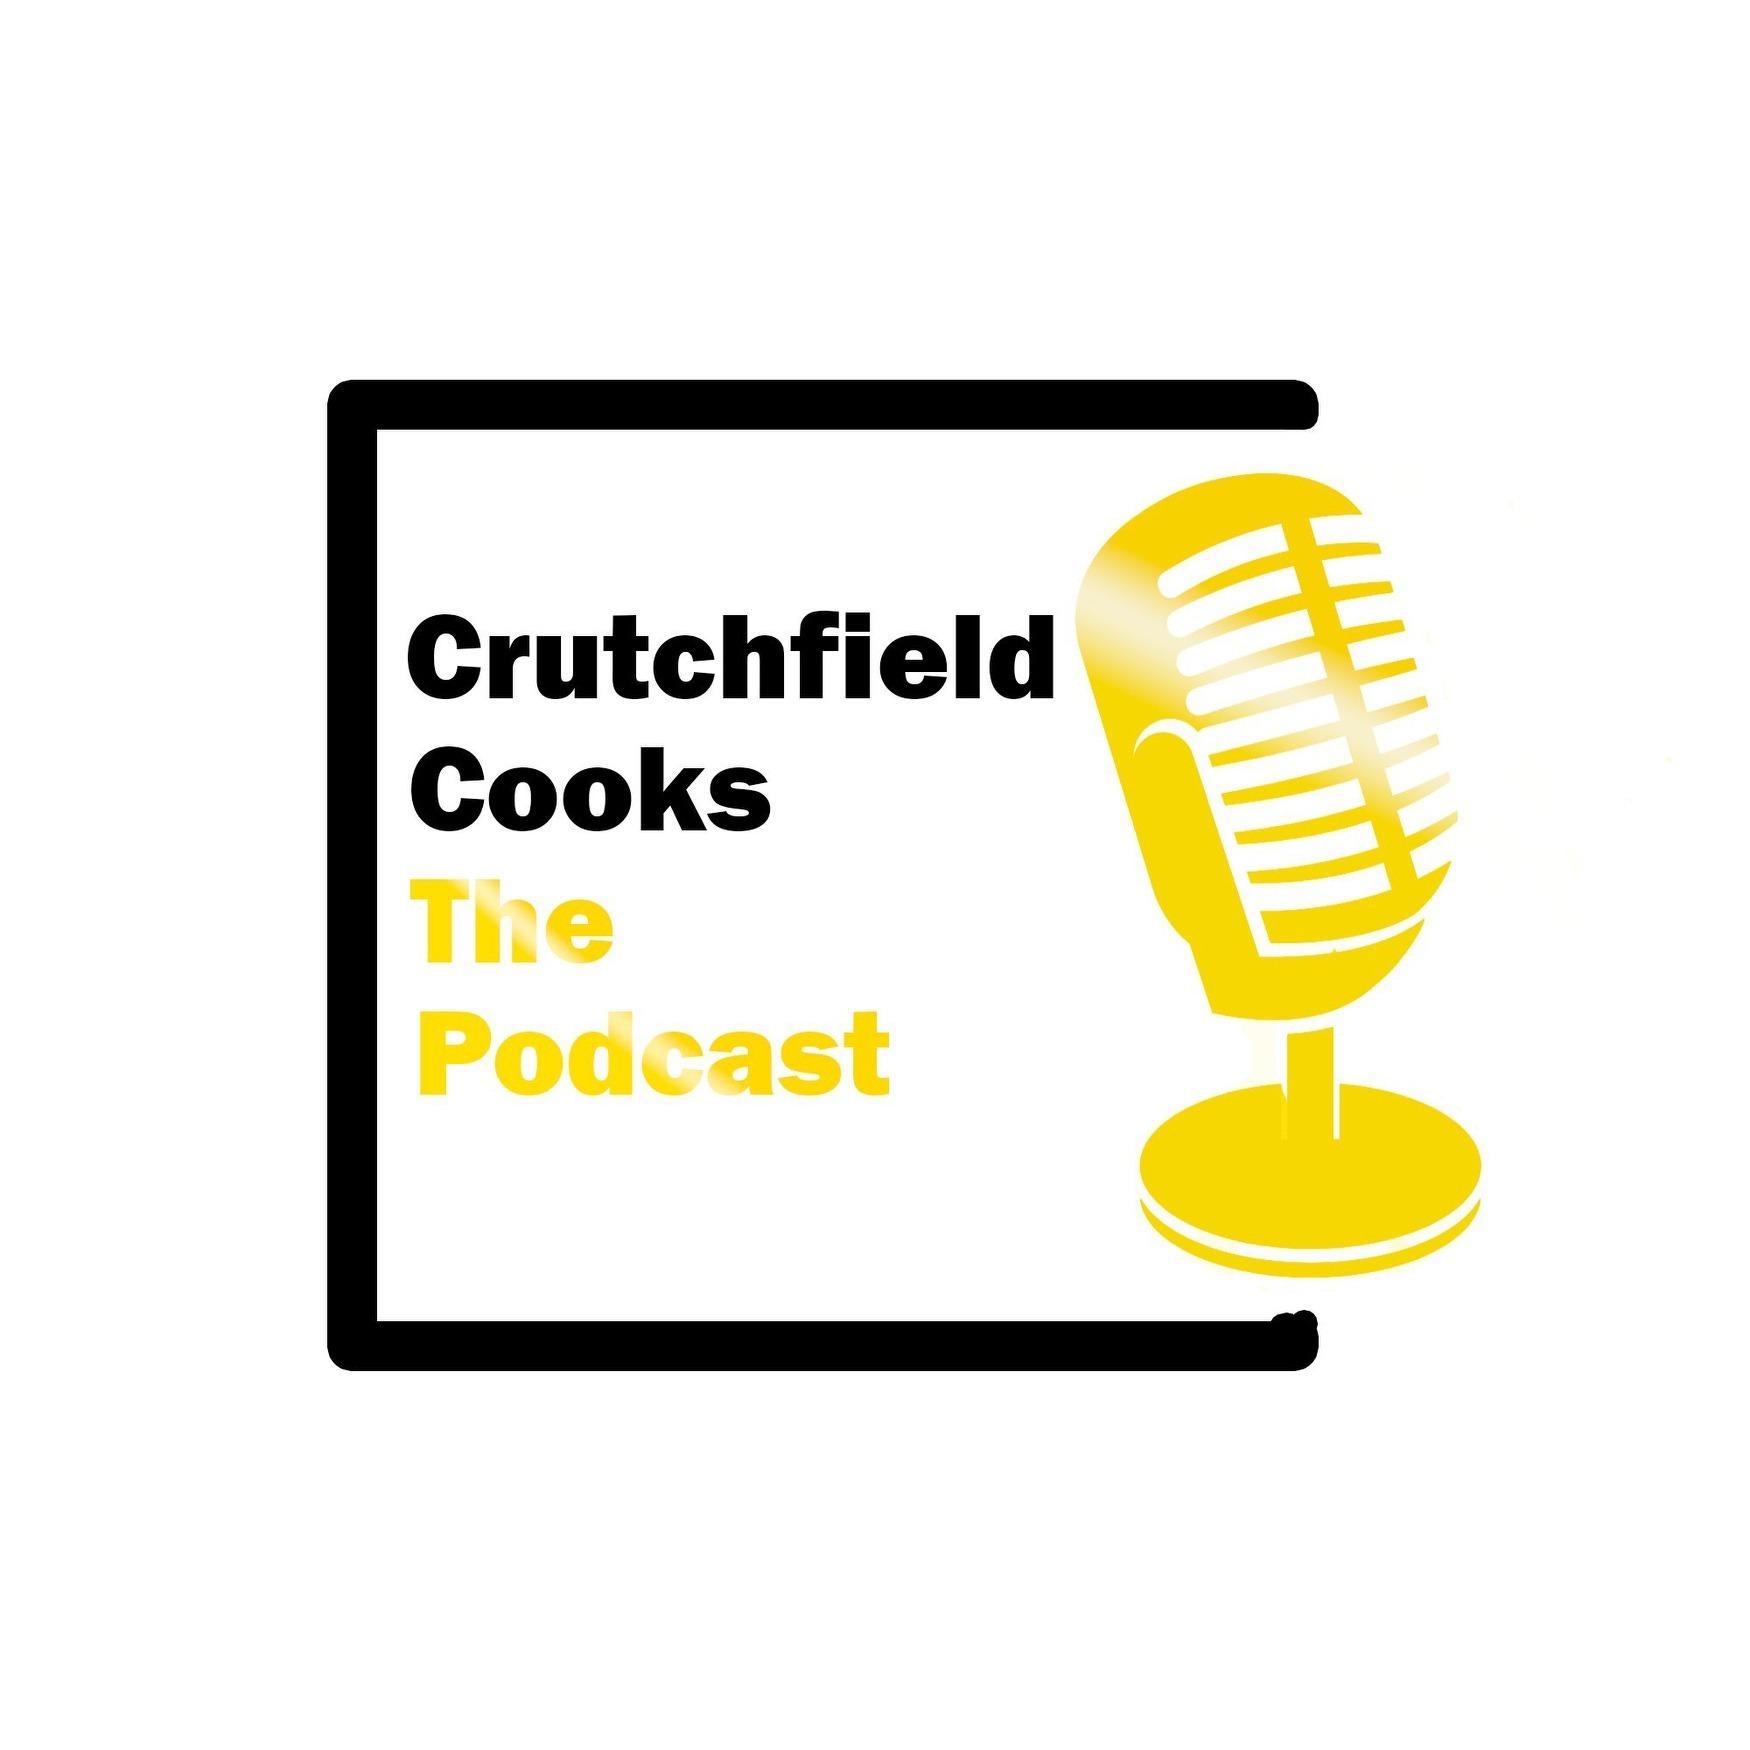 Crutchfield Cooks: The Podcast